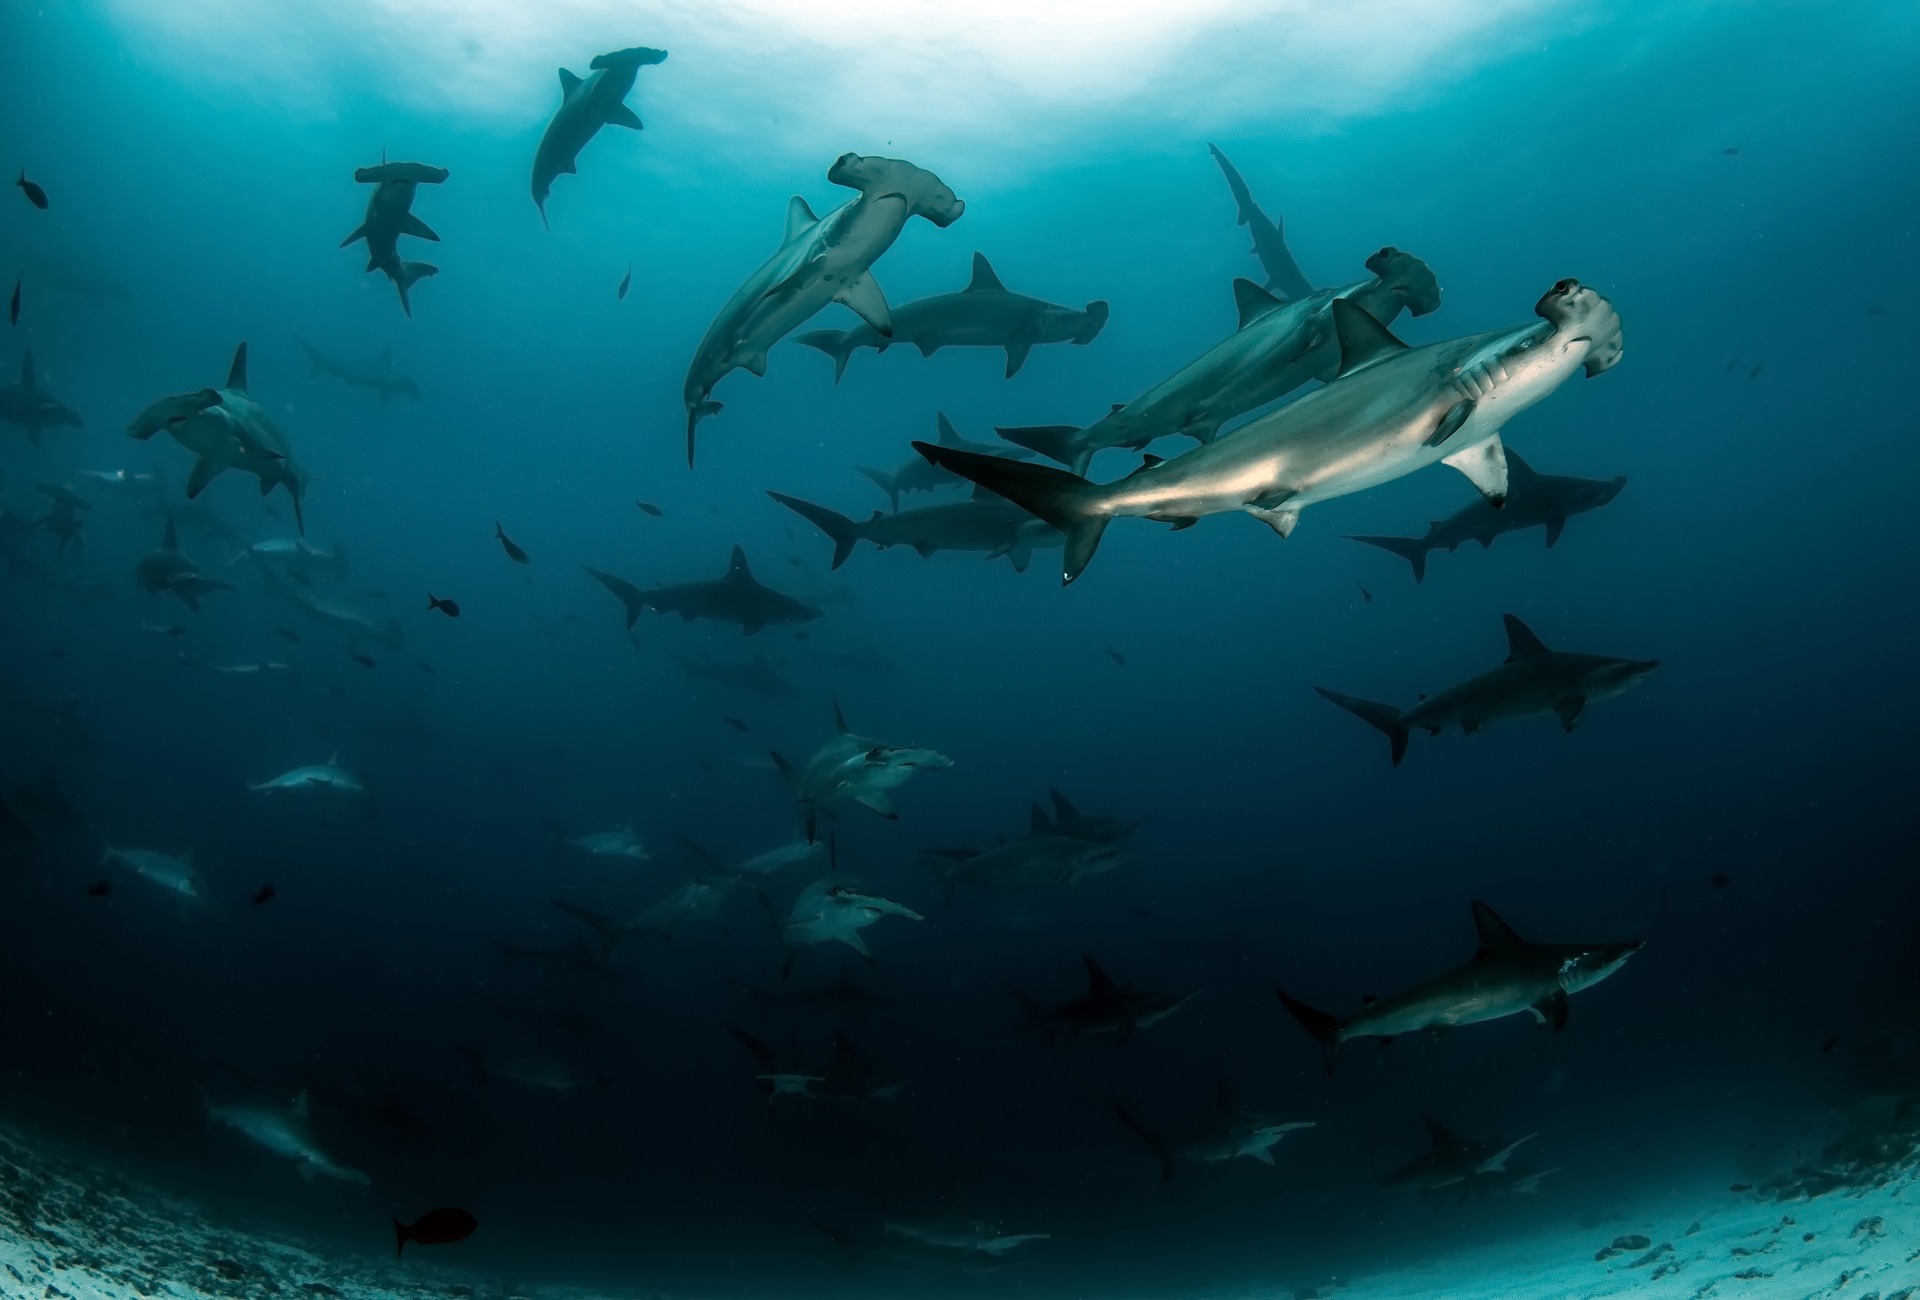 Scalloped Hammerhead Sharks, courtesy of Tomas Kotouc